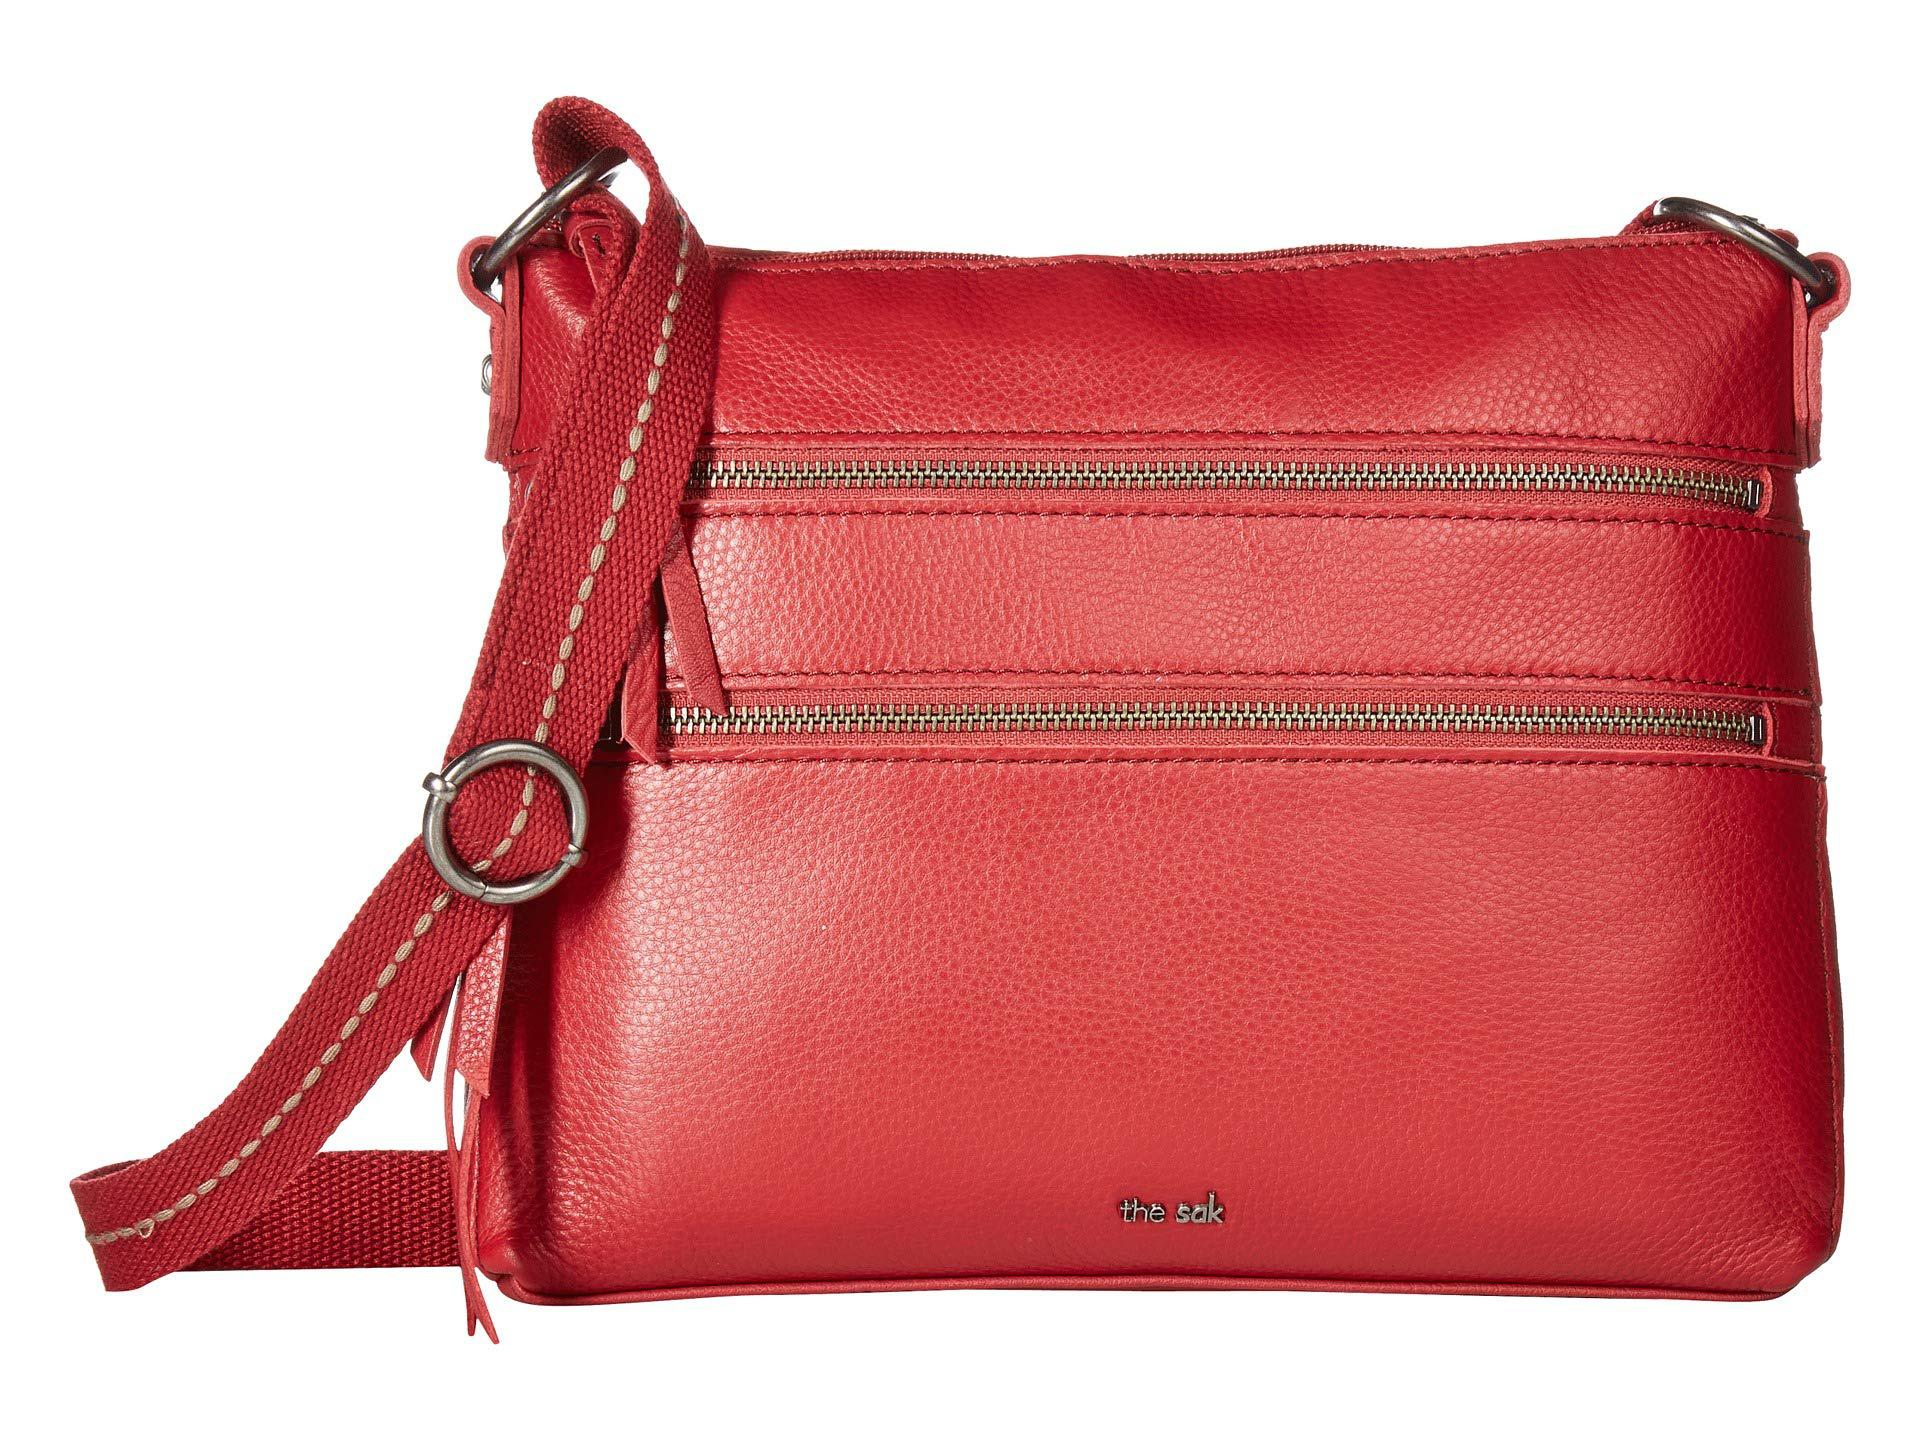 Lyst - The Sak Reseda Leather Crossbody (scarlet) Cross Body Handbags ...